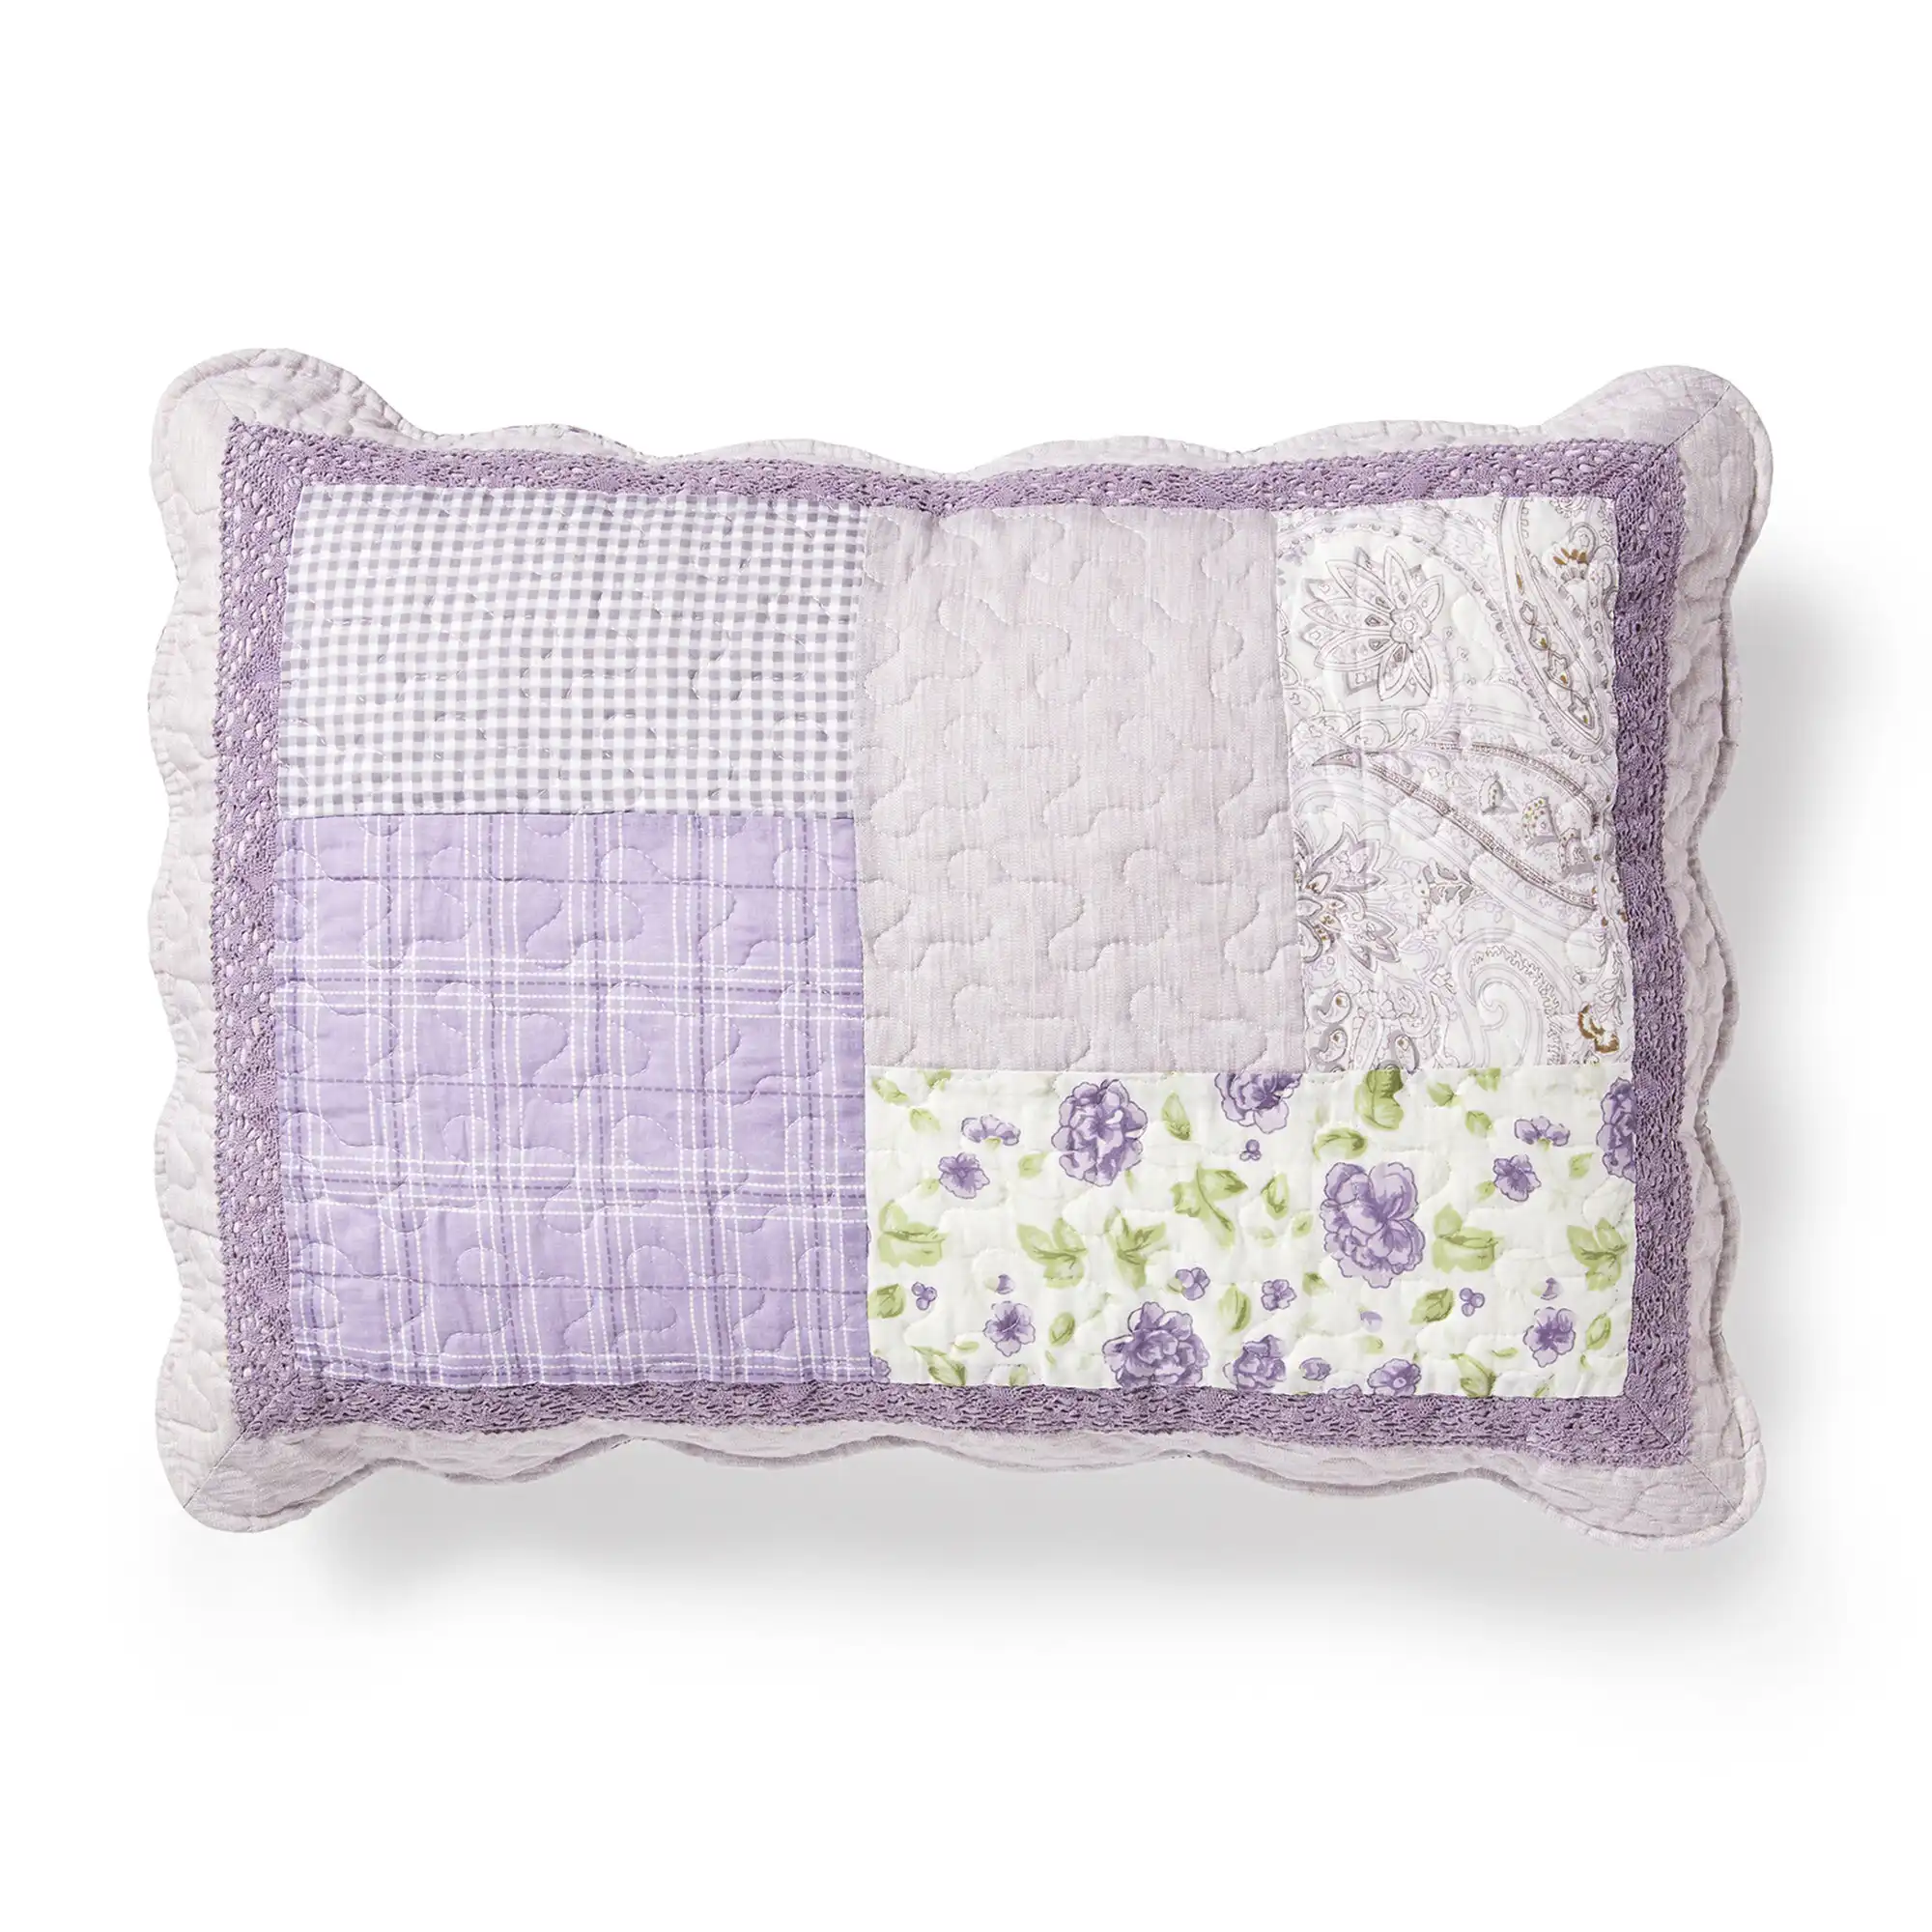 Donna Sharp Lavender Rose Cotton Pillow Sham & Reviews | Wayfair